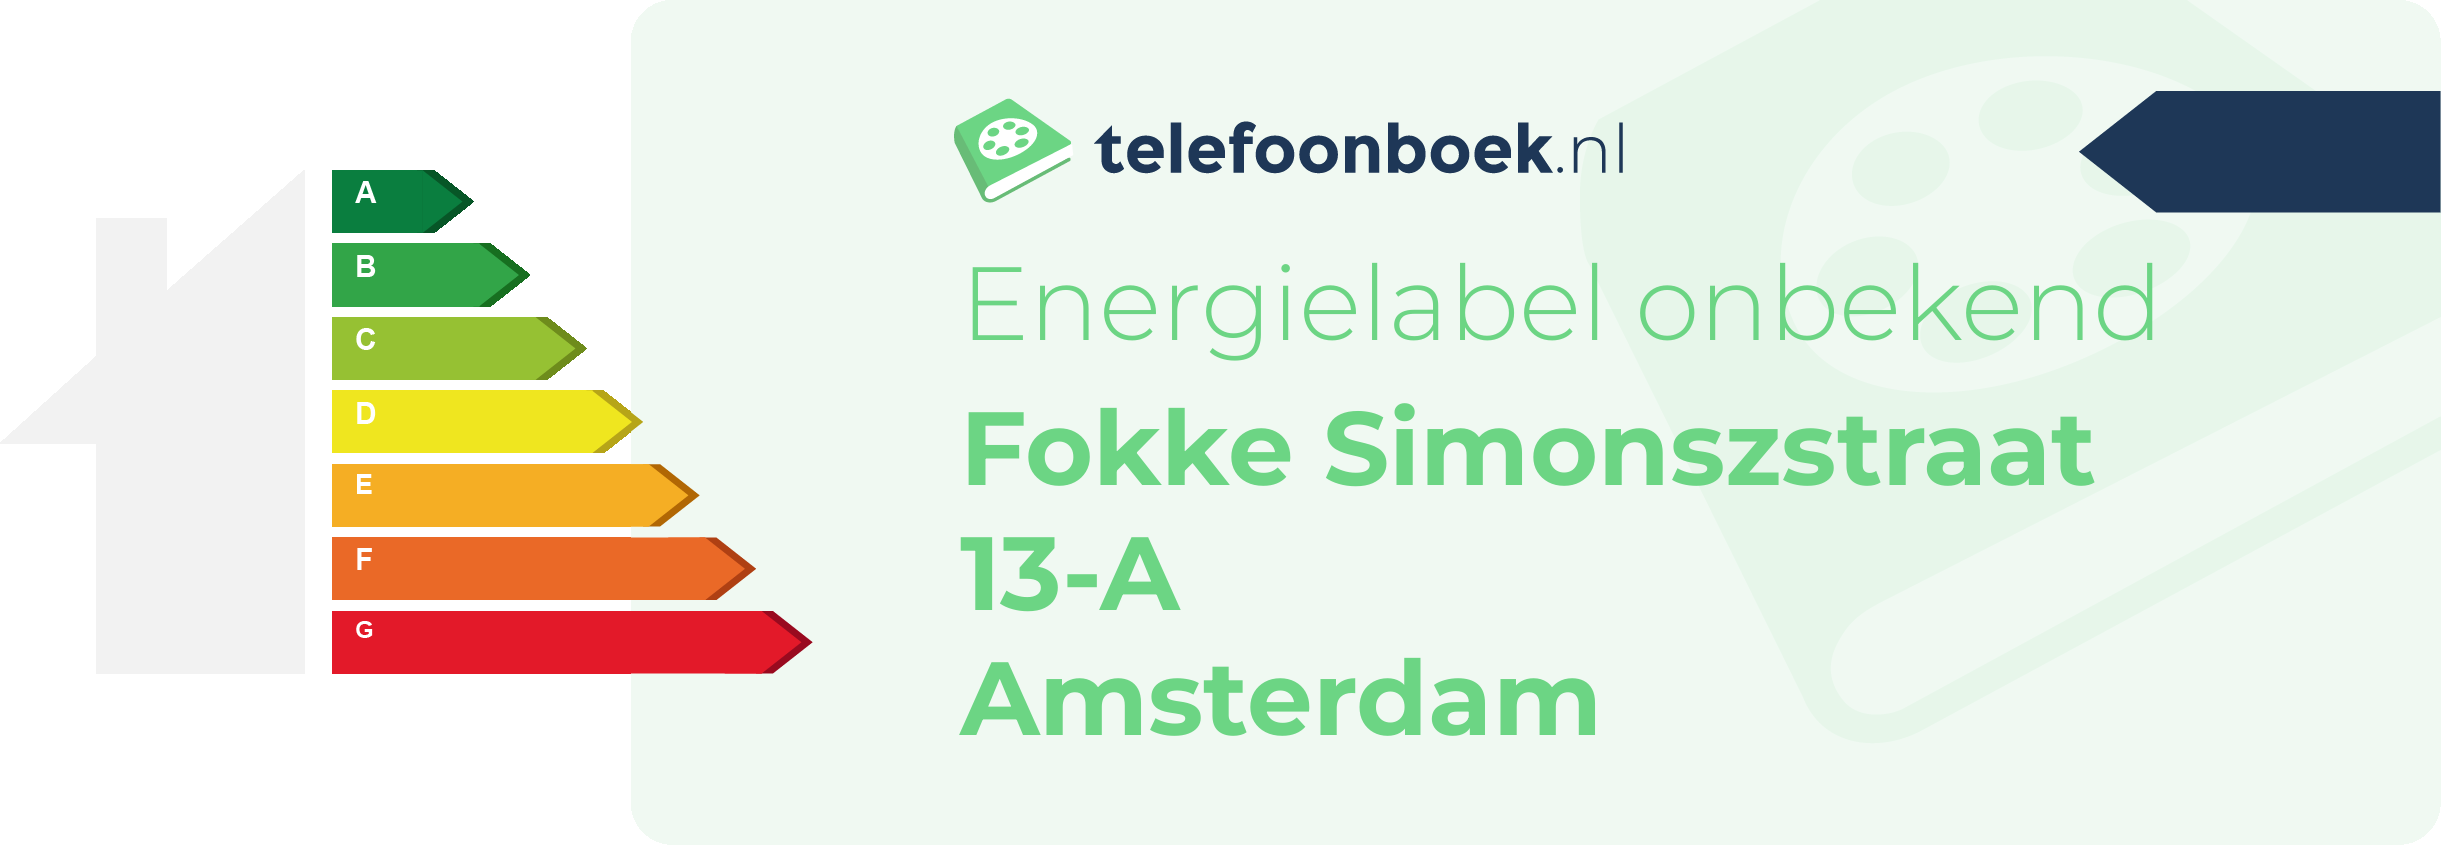 Energielabel Fokke Simonszstraat 13-A Amsterdam